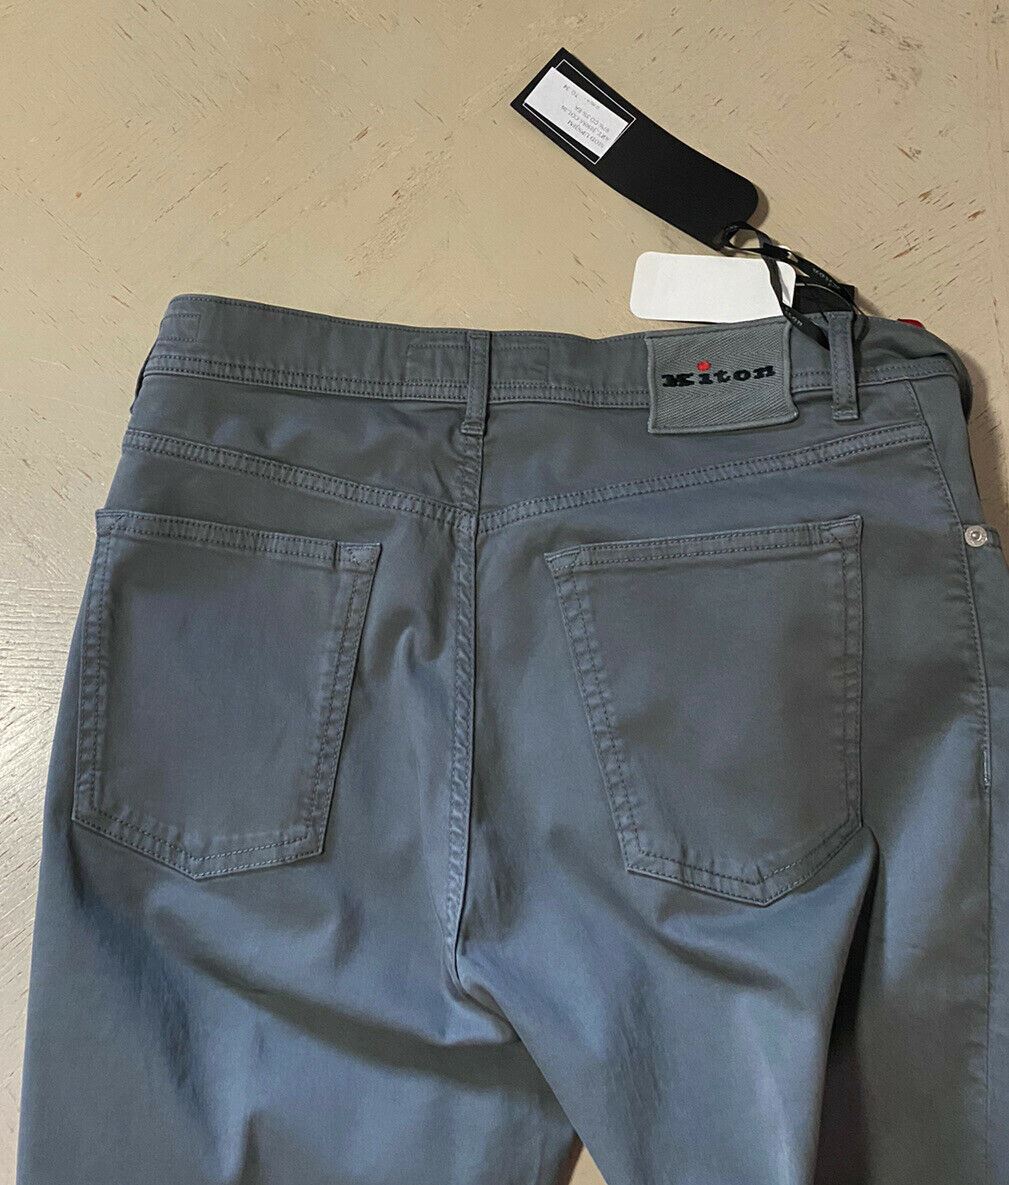 Neu mit Etikett: 1102 $ Kiton Herren Slim Fit Jeans Hose Grau 34 US (50 Eu) Italien